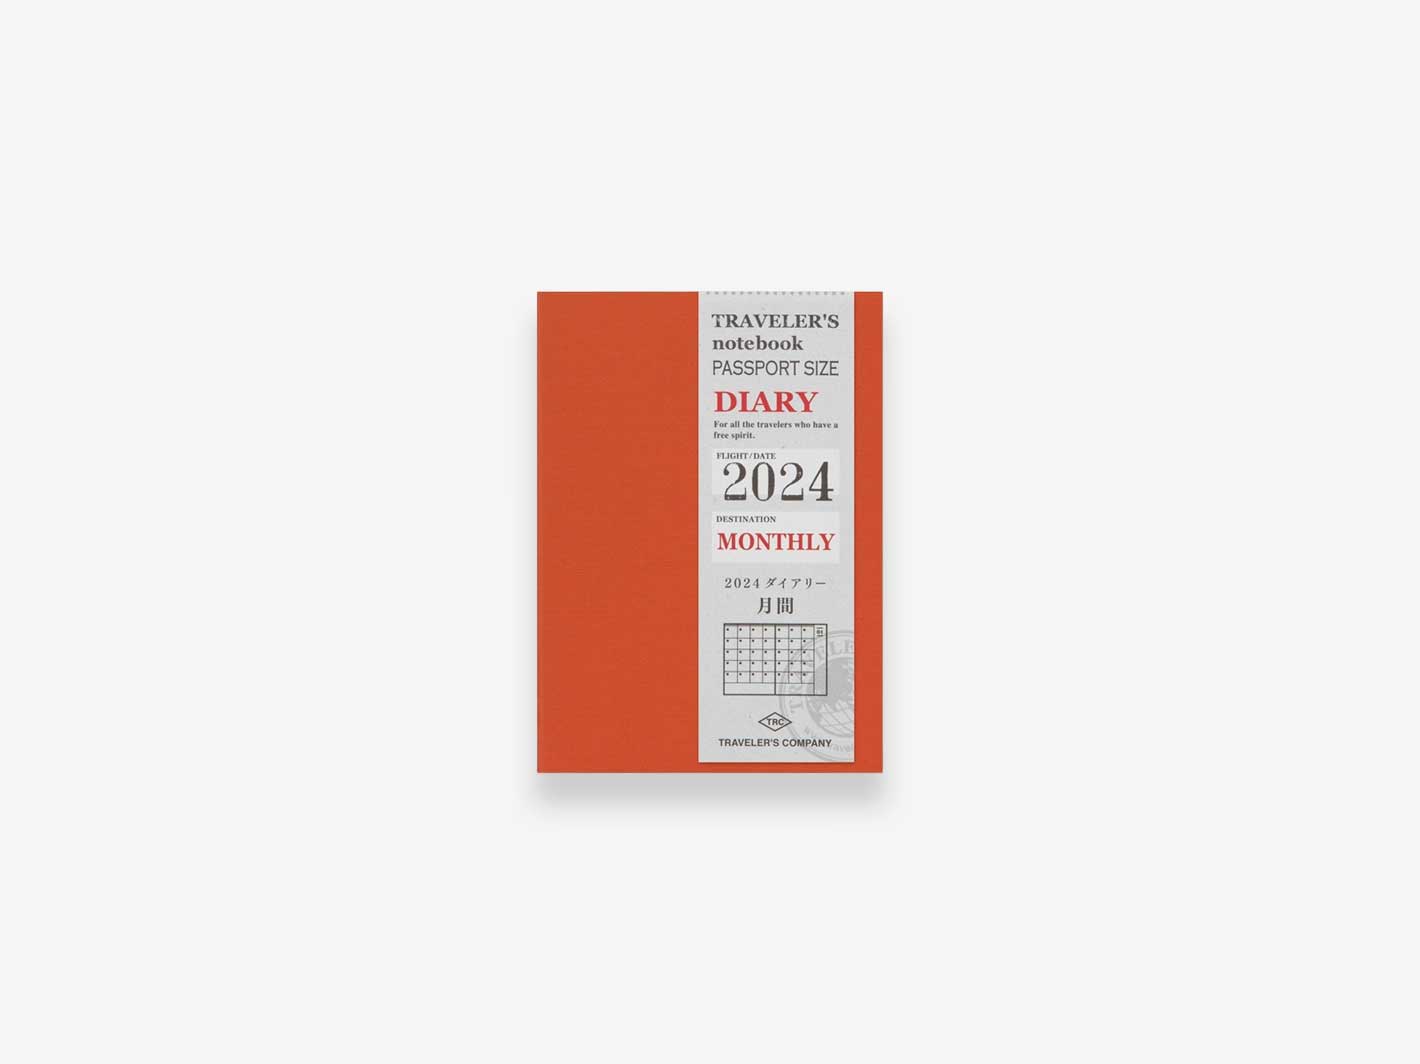 2024 TRAVELER'S notebook Monthly Diary Passport Size